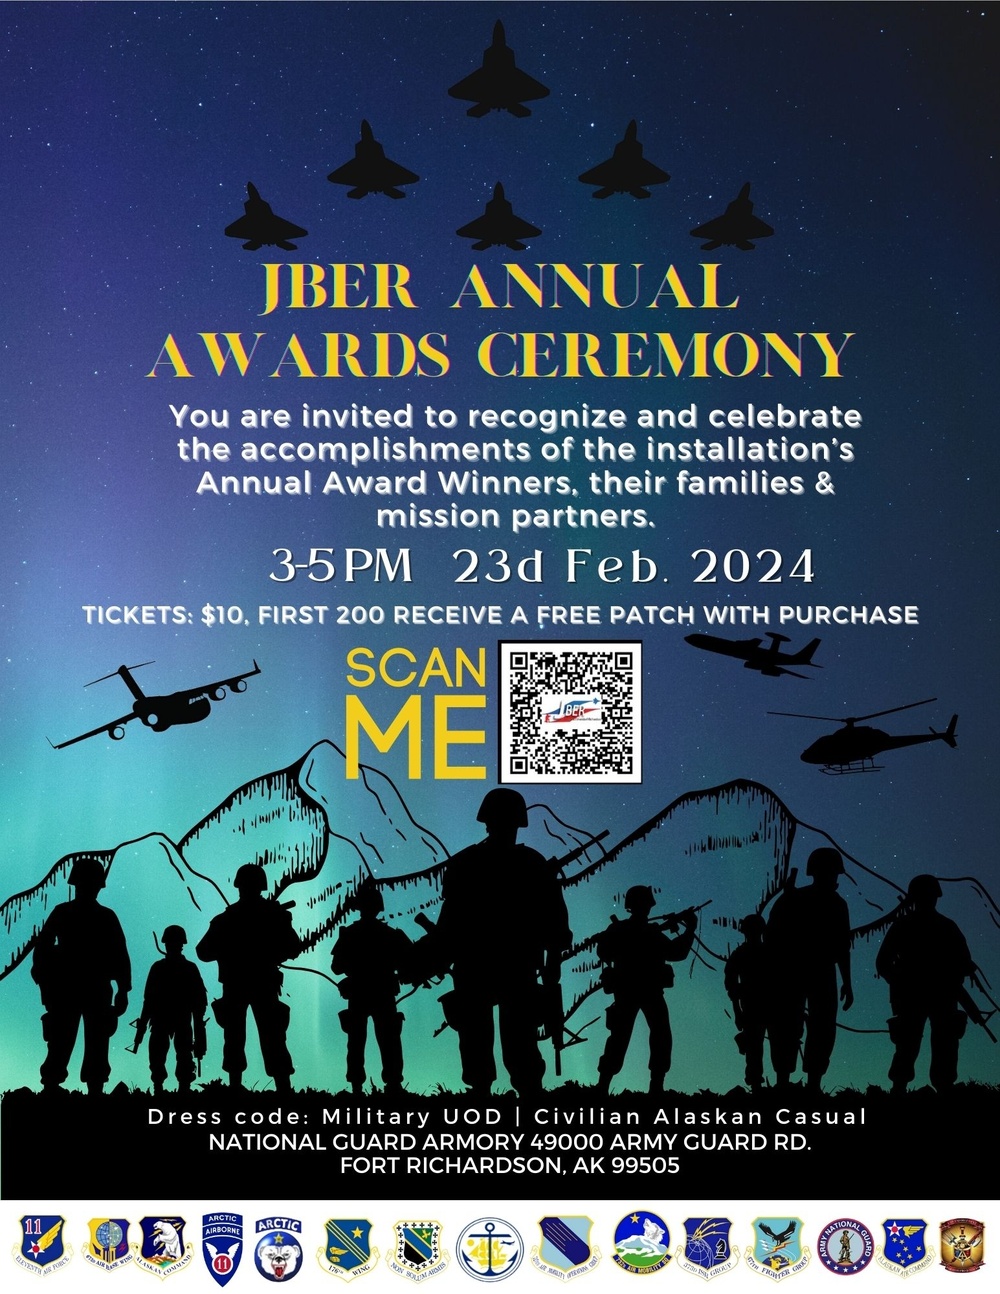 JBER Annual Awards Ceremony Flyer